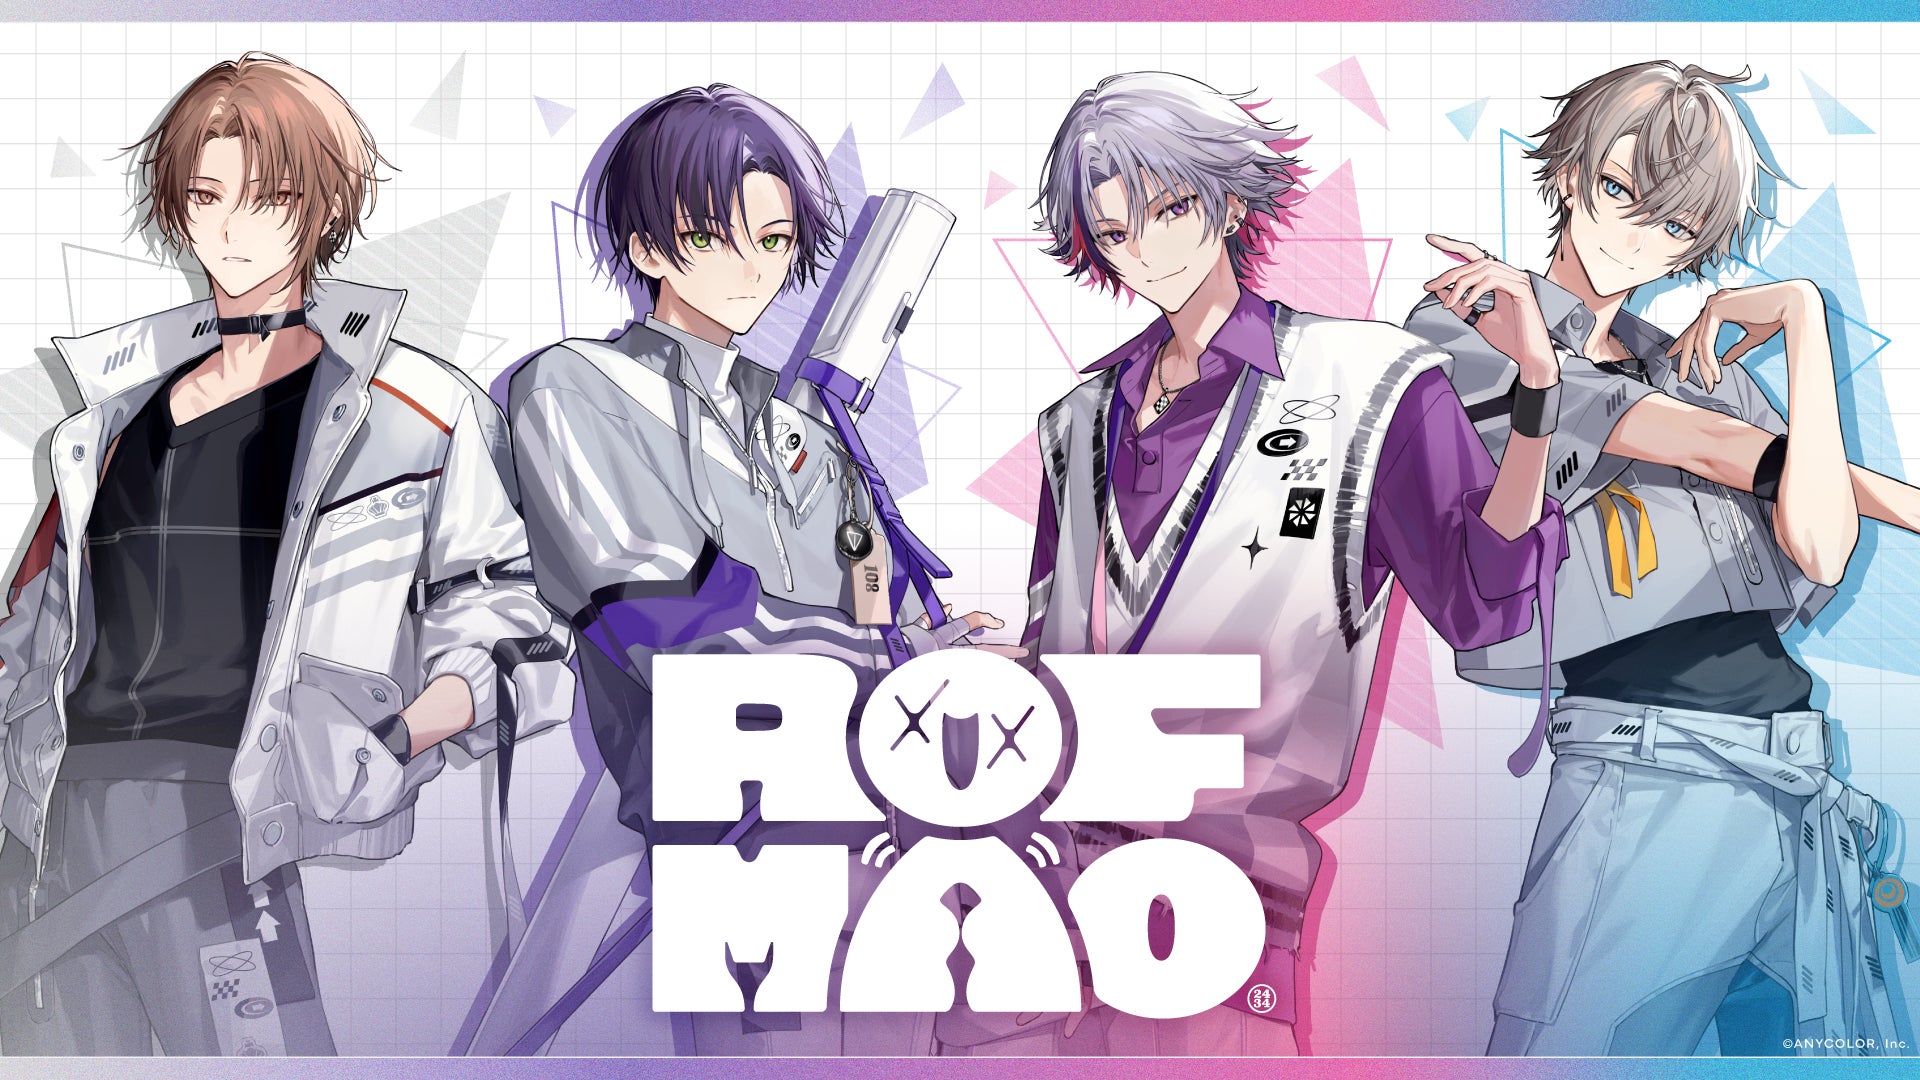 「ROF-MAO 1st LIVE - New street, New world」グッズを2024年3月21日(木)18時より事前販売開始！